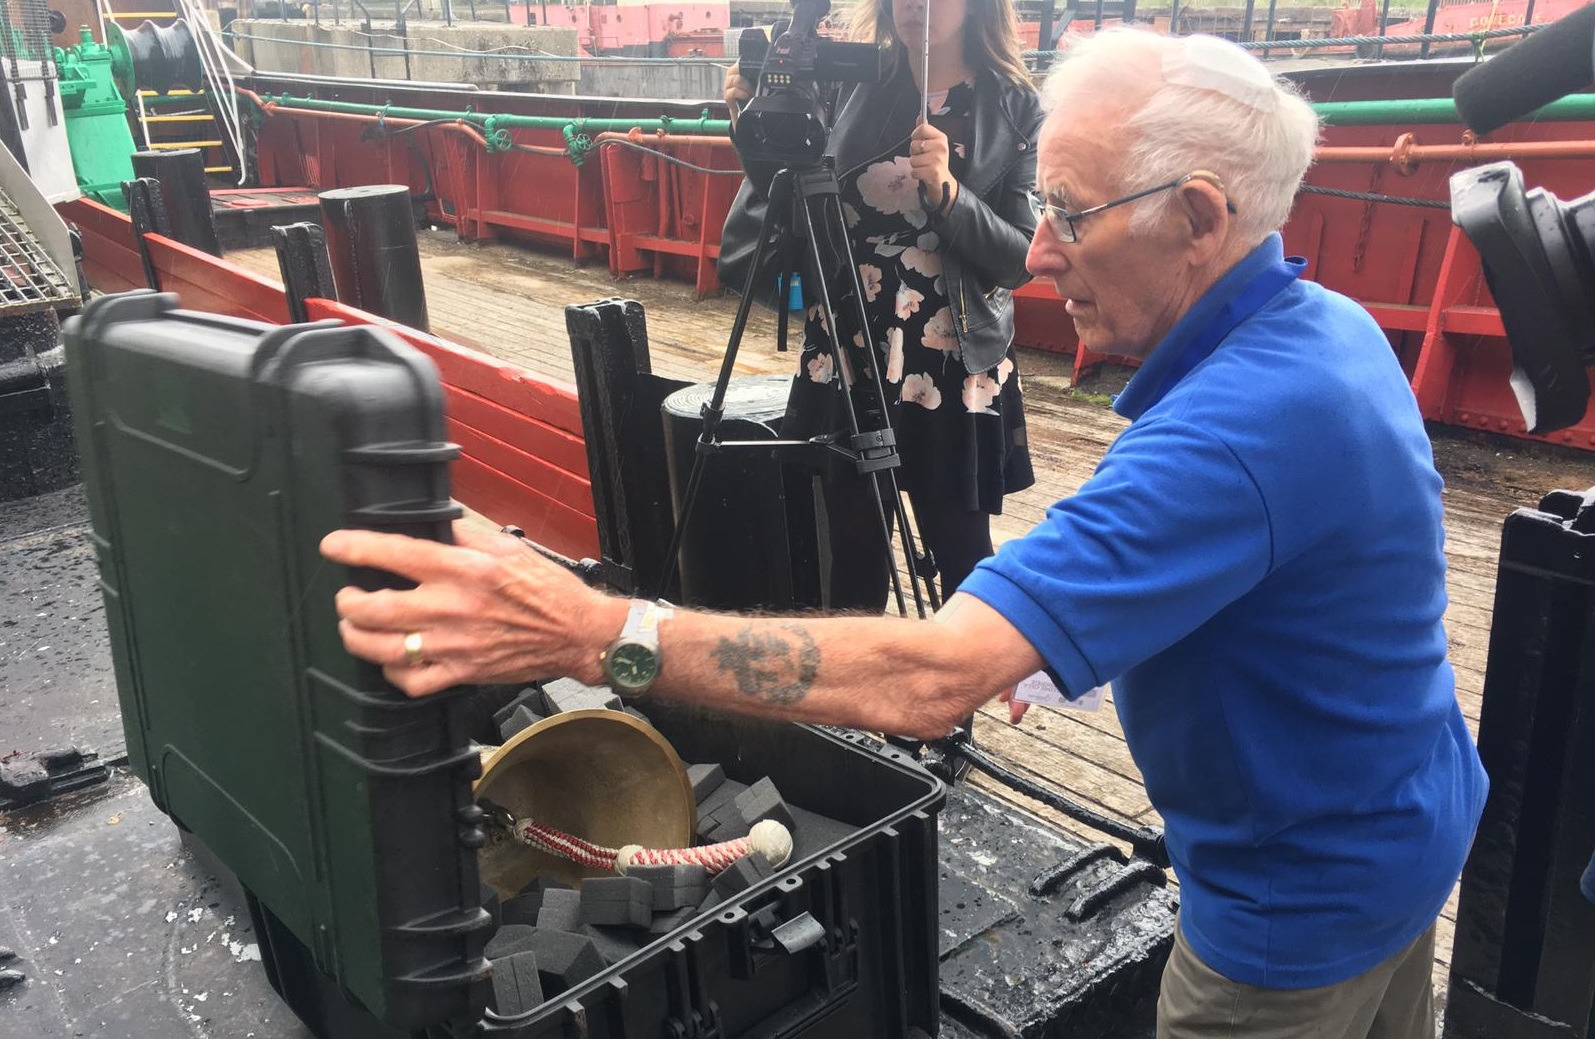 The Arctic Corsair's bell is carefully packed away by volunteer Trevor Evans.